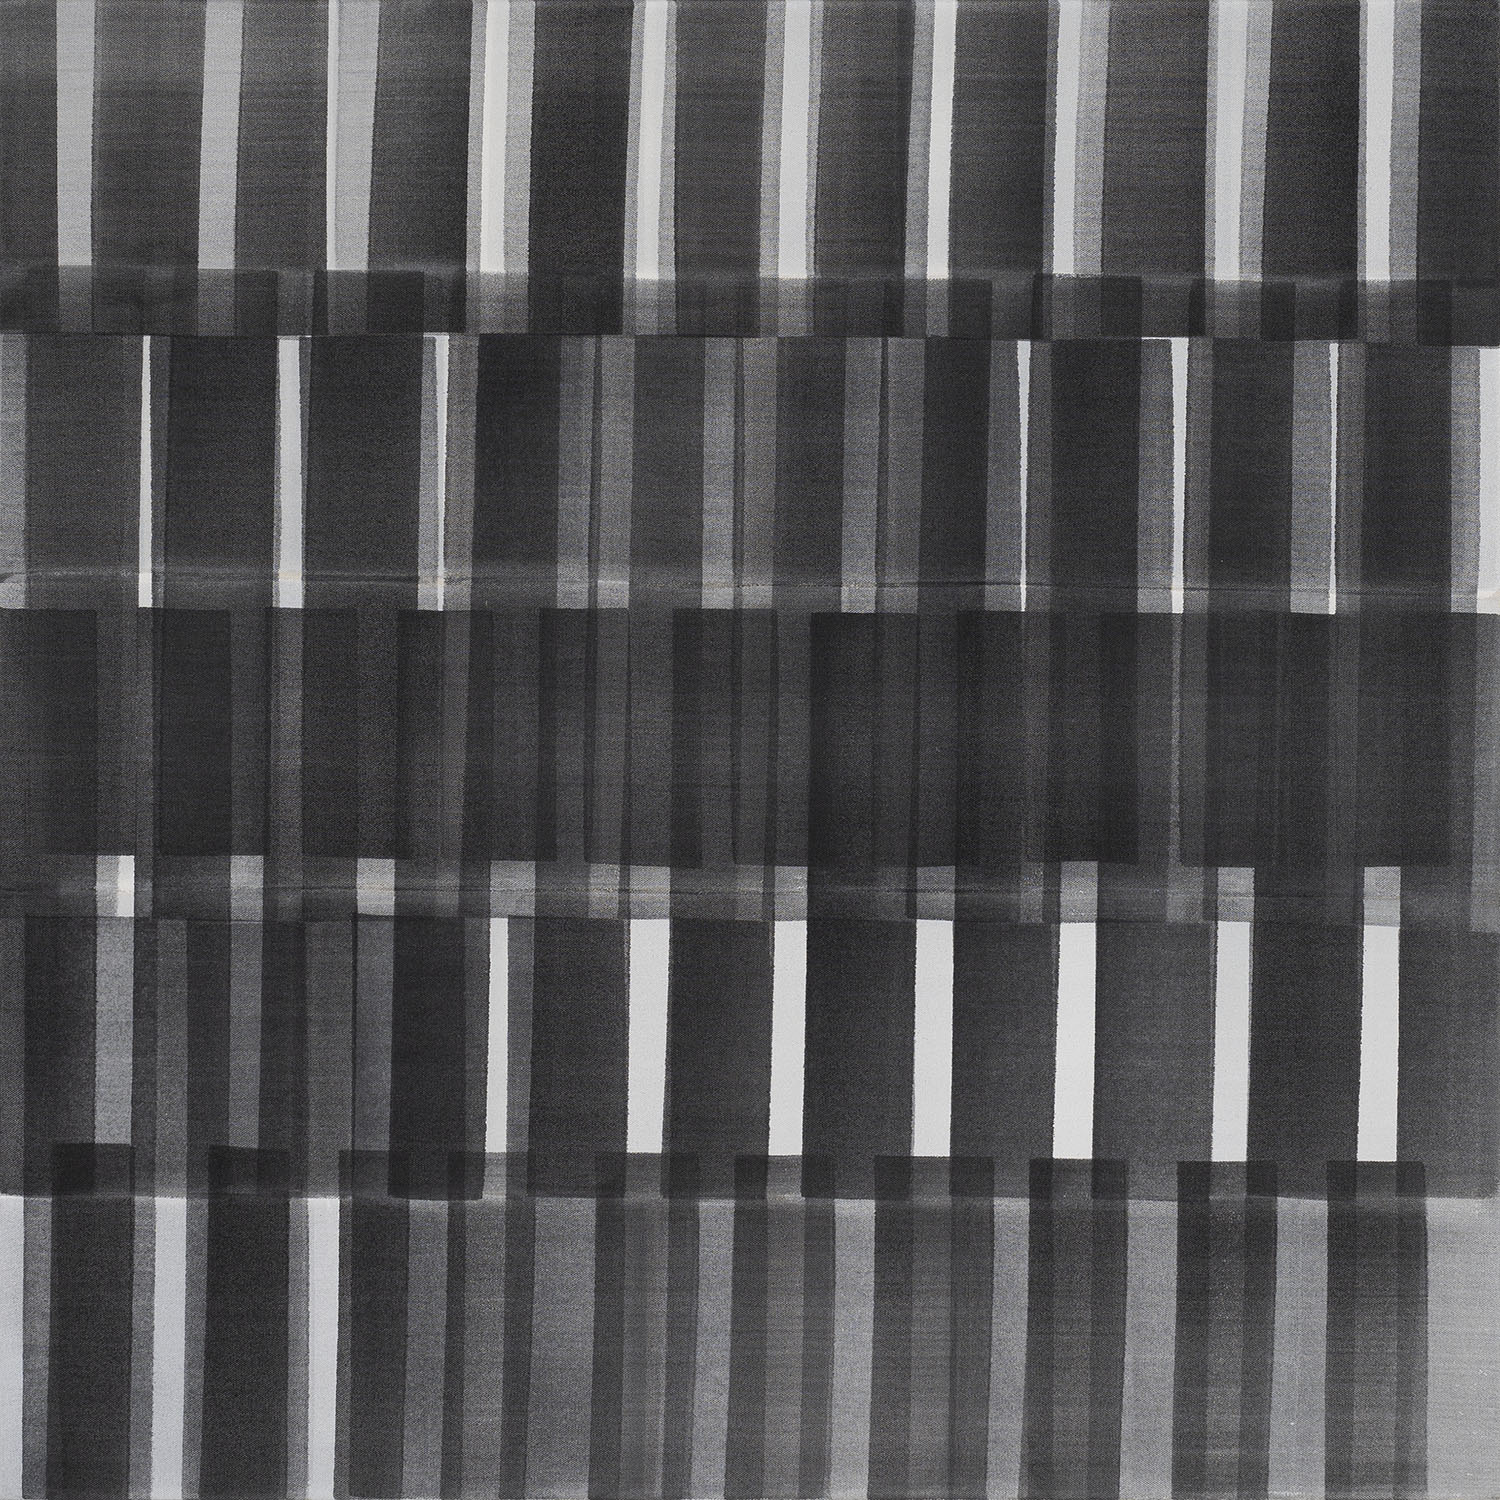 Nikola Dimitrov, Rhythmen, 2024, Pigmente, Bindemittel auf Leinwand, 100 x 100 cm